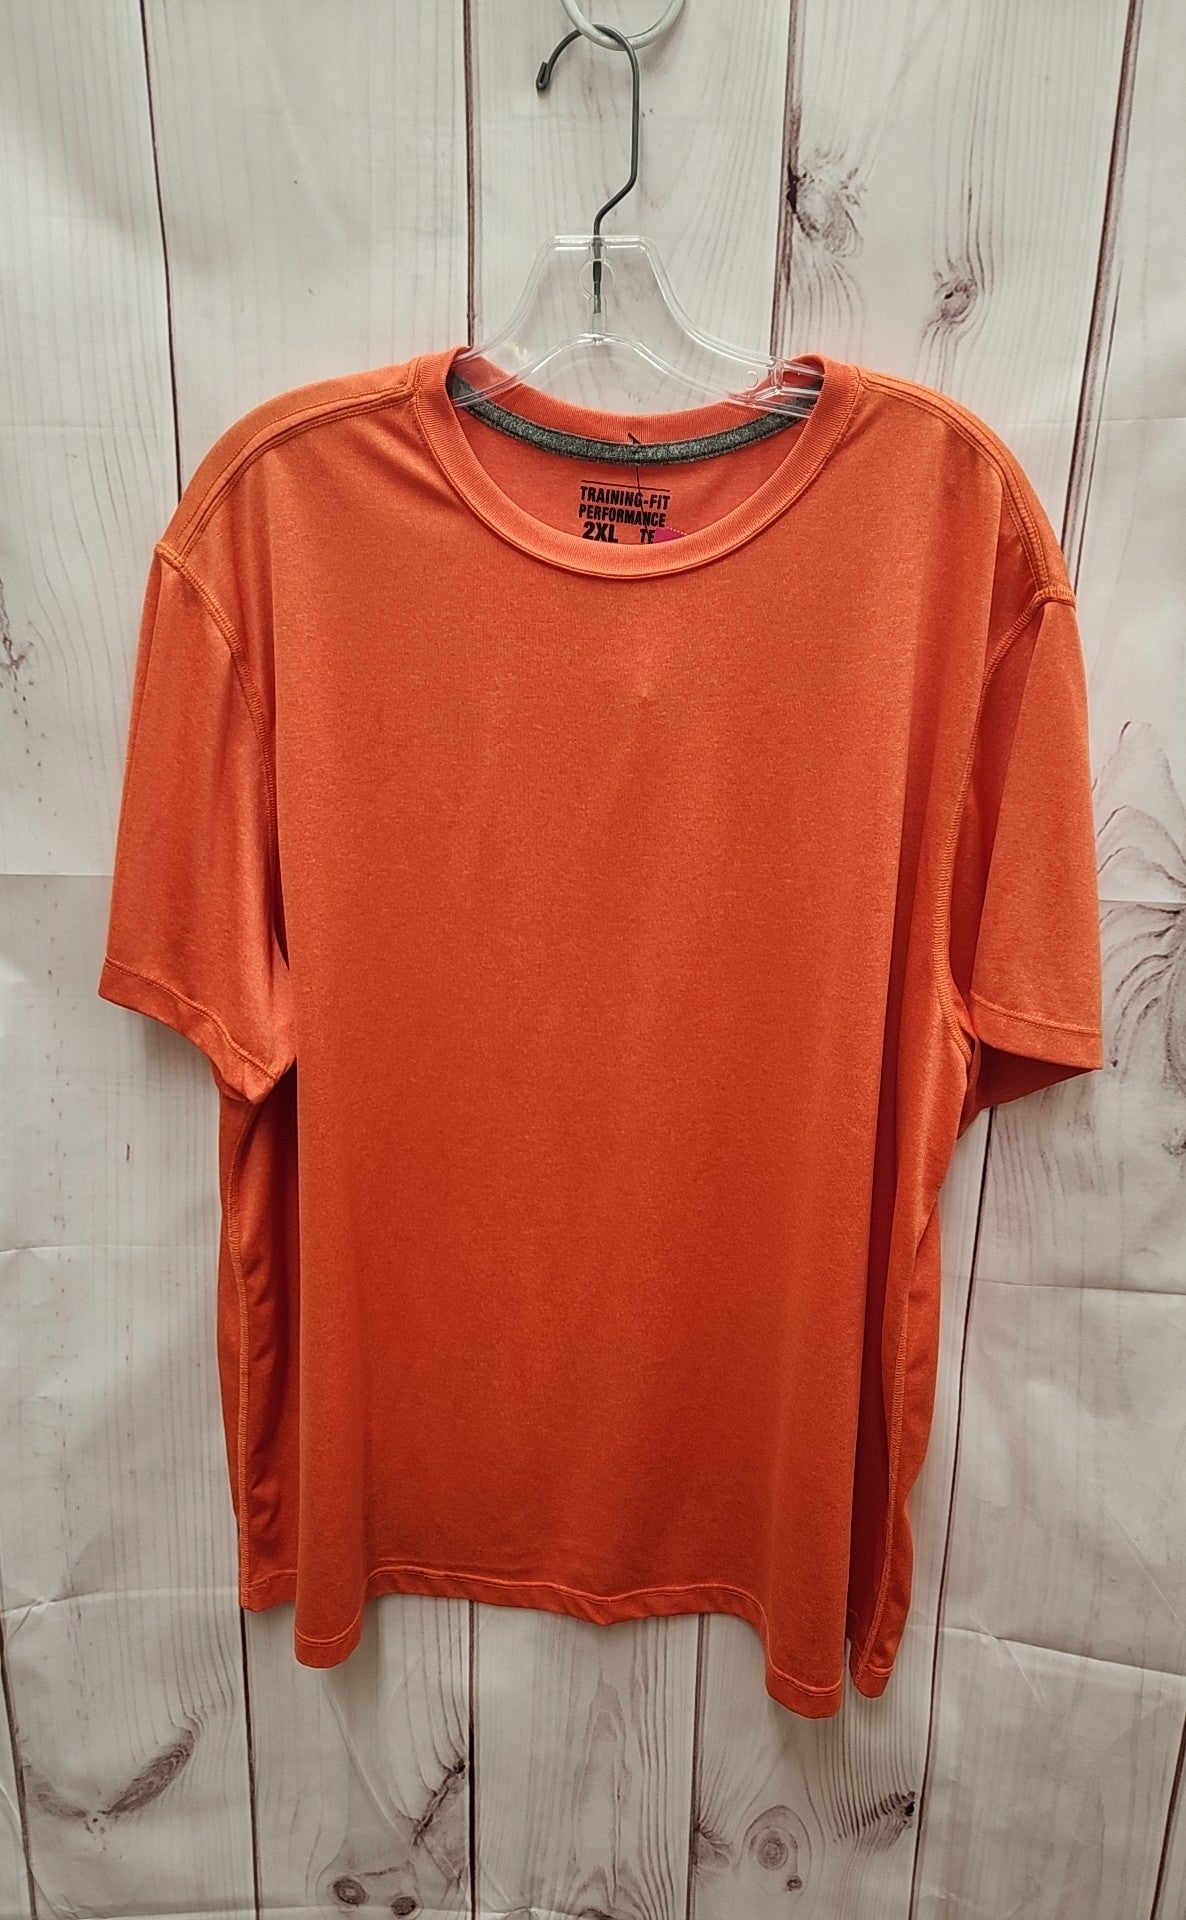 Starter Men's Size 2X Orange Shirt